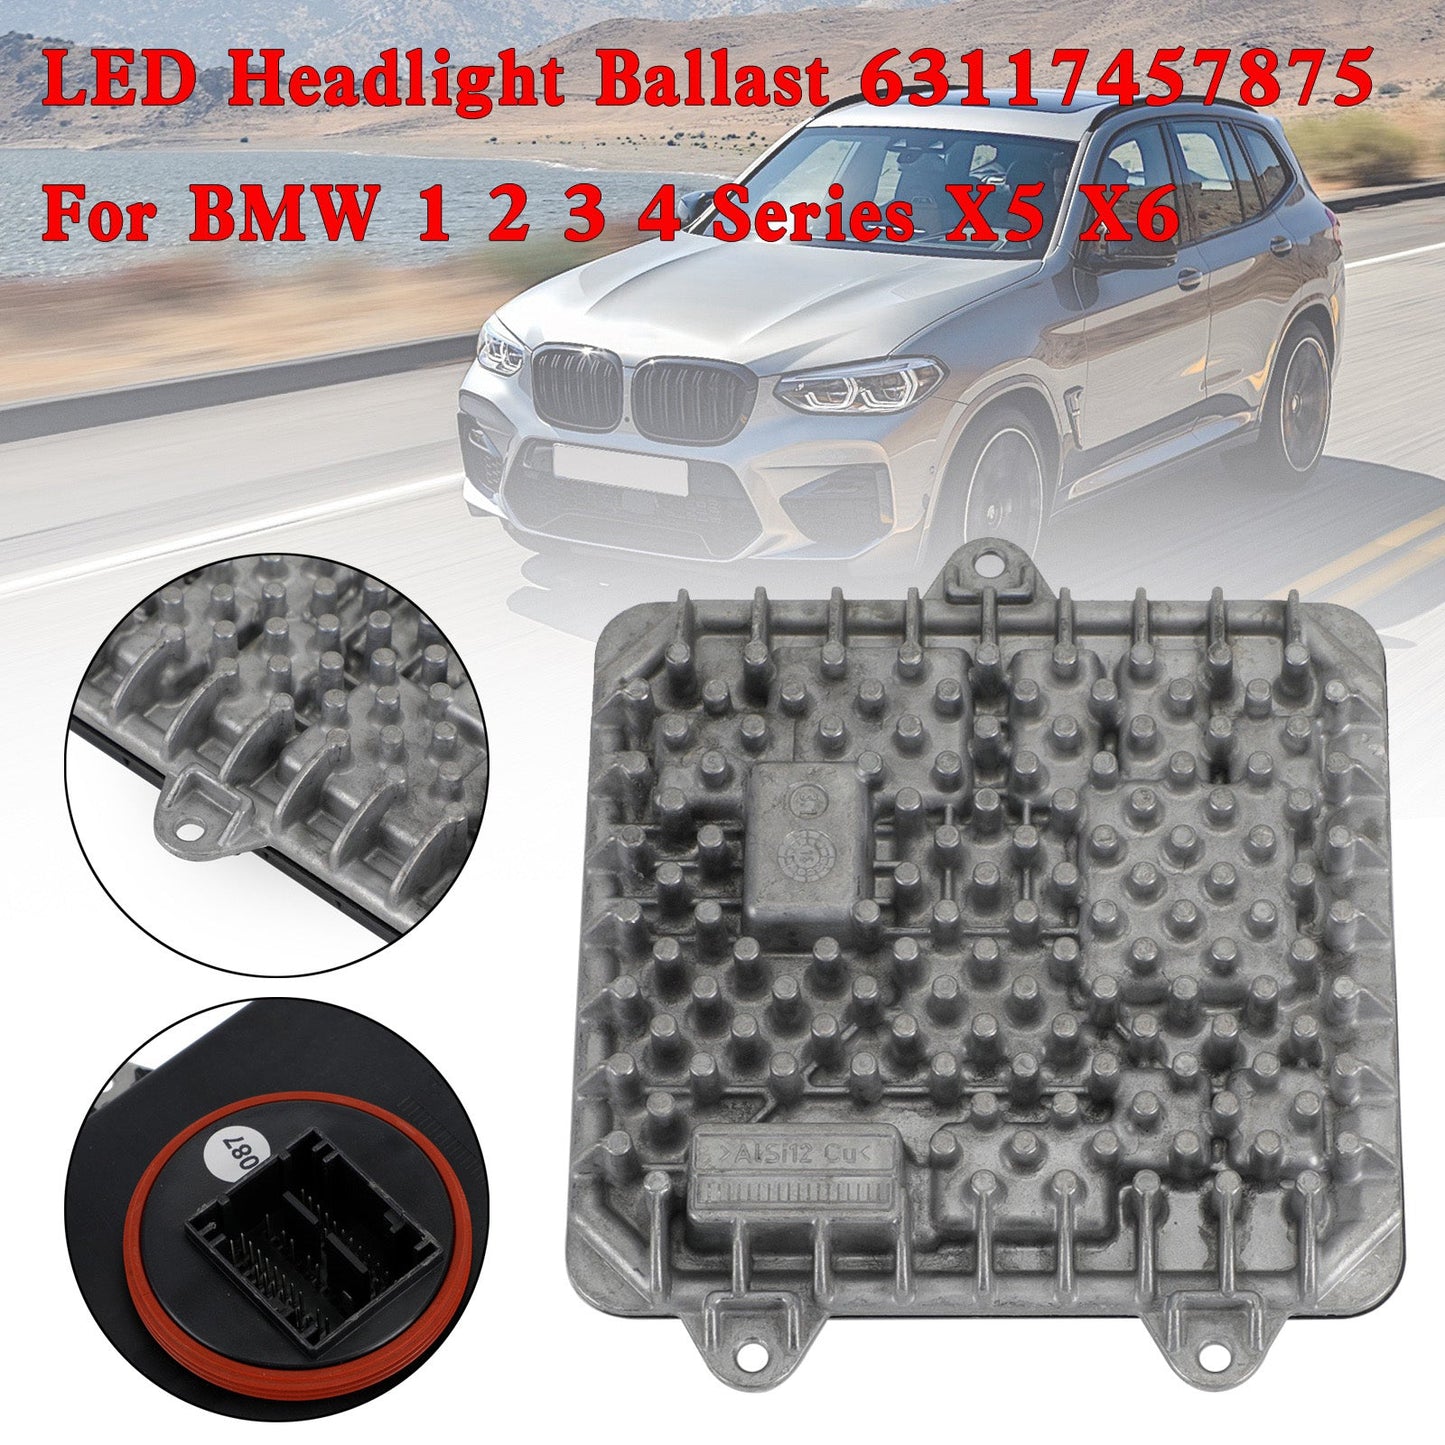 LED Headlight Ballast 63117457875 For BMW 1 2 3 4 Series X5 X6